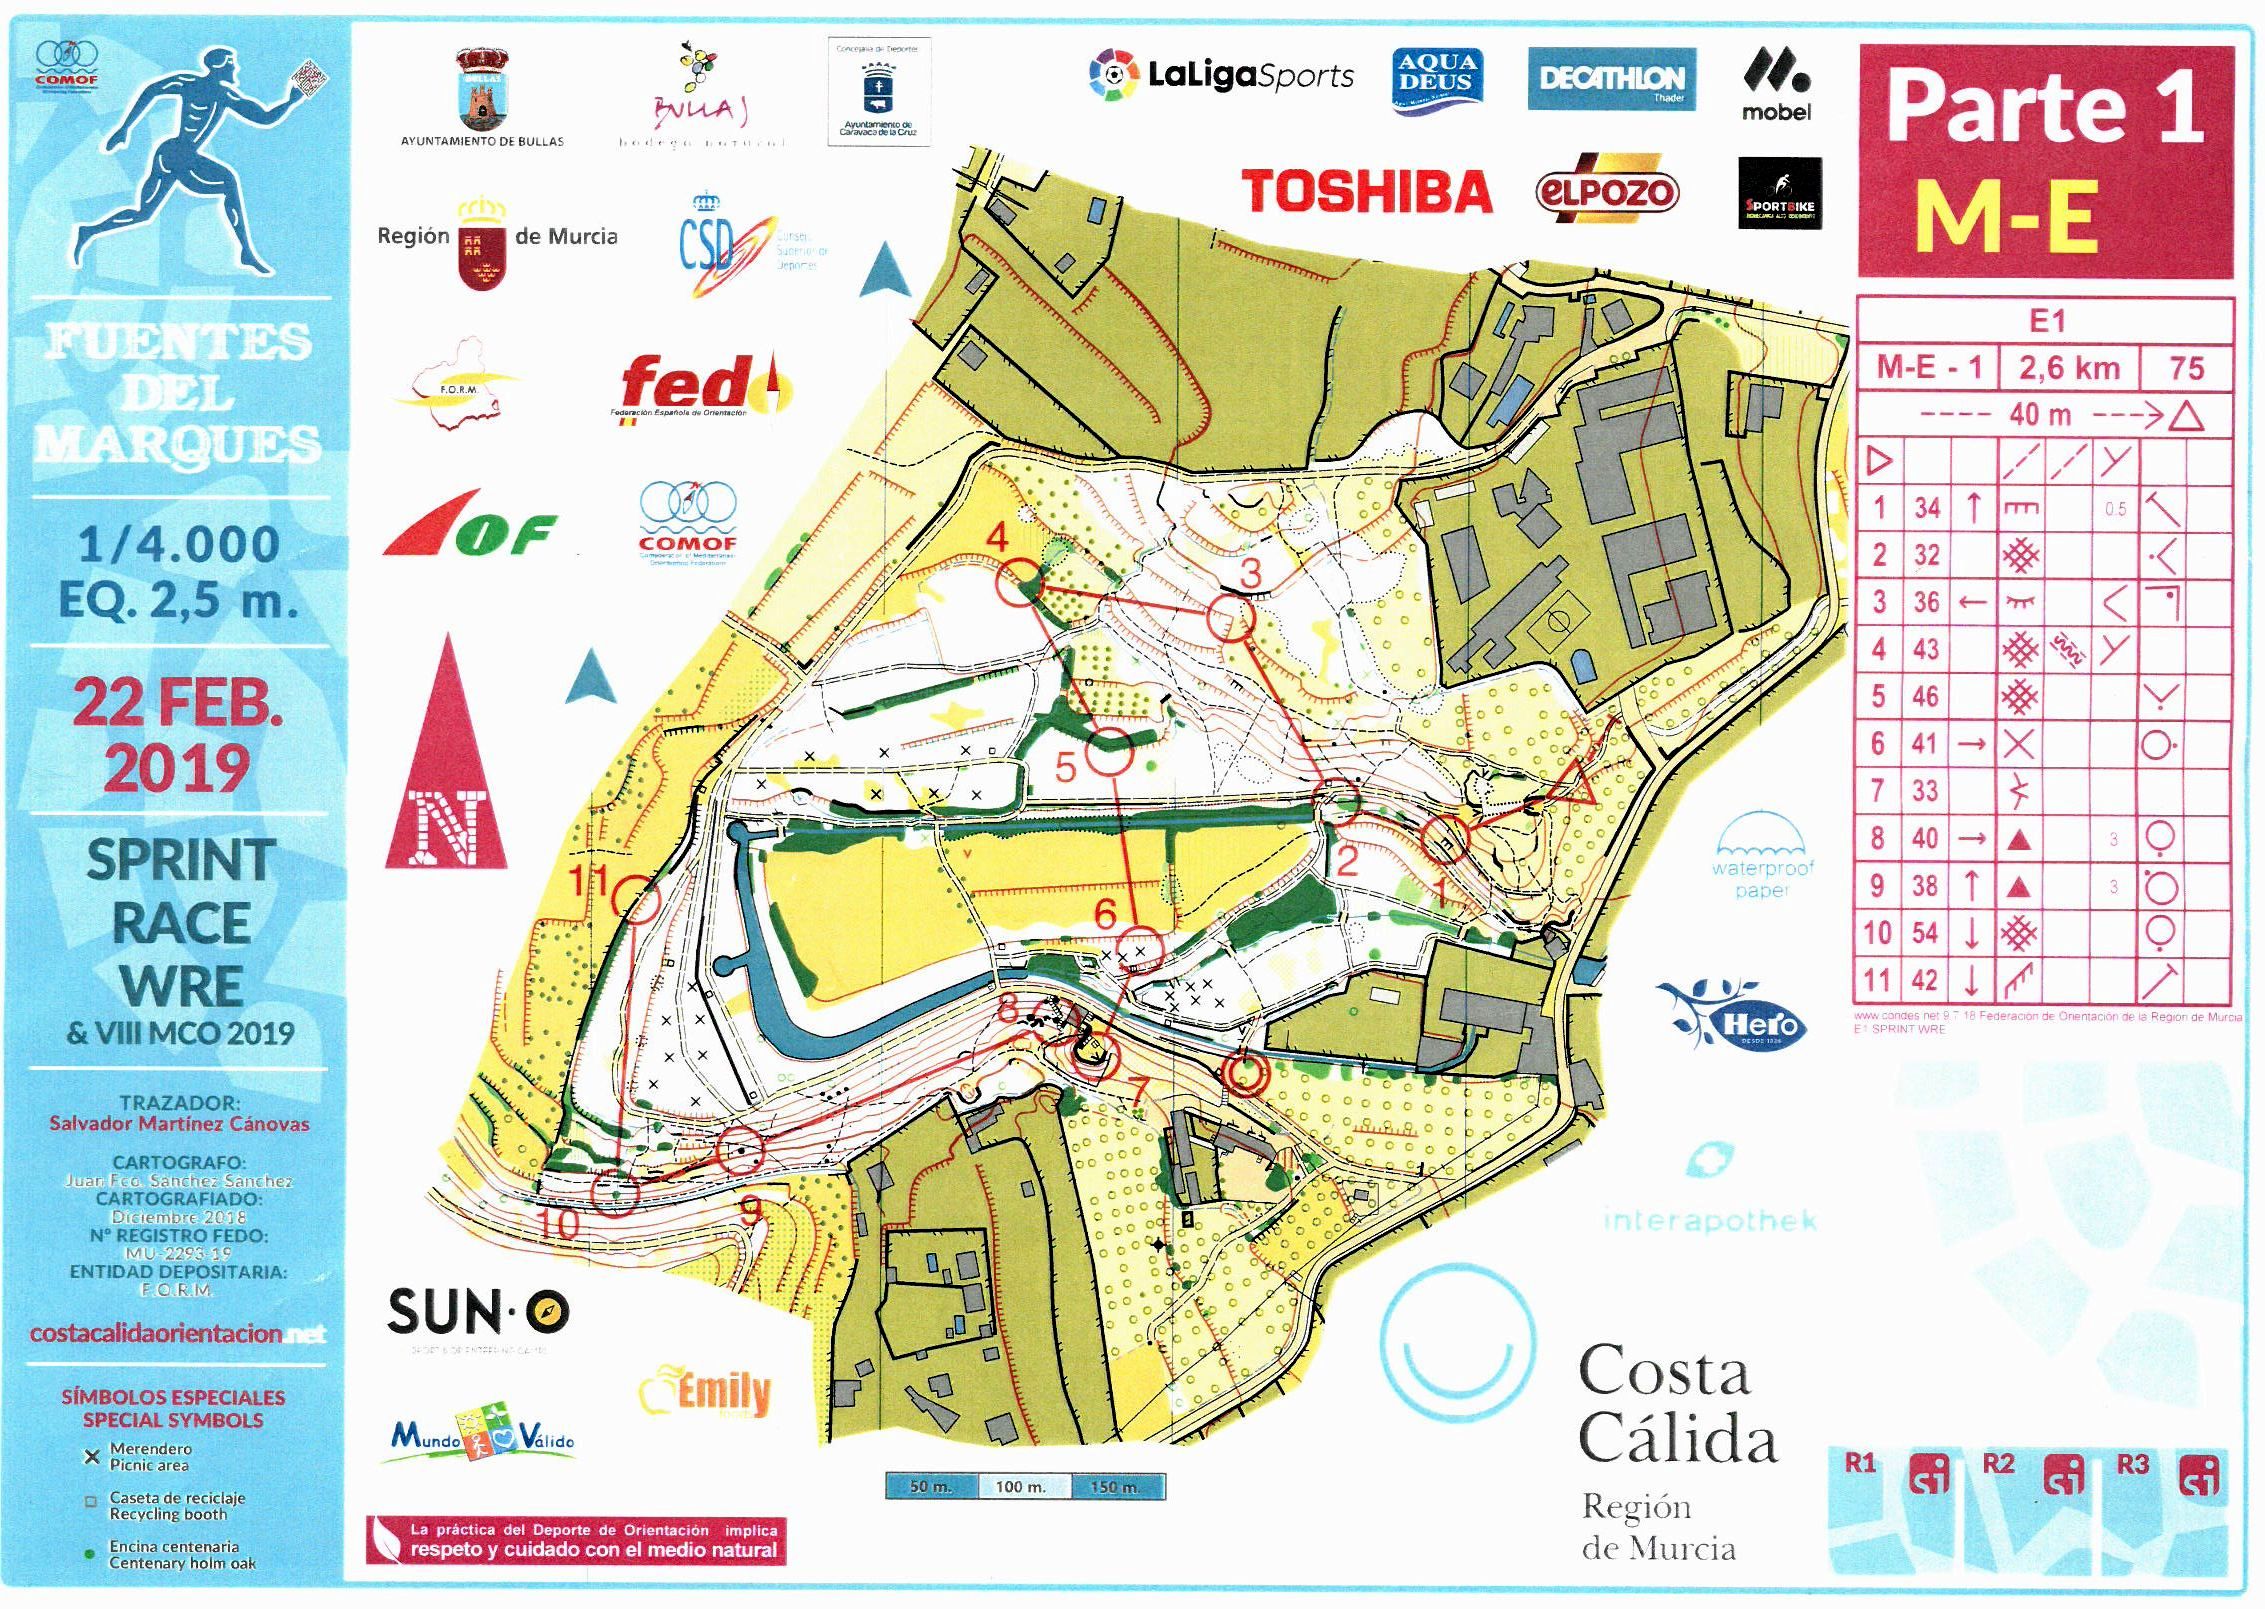 Costa Calida E1 - WRE sprint 1 (22/02/2019)